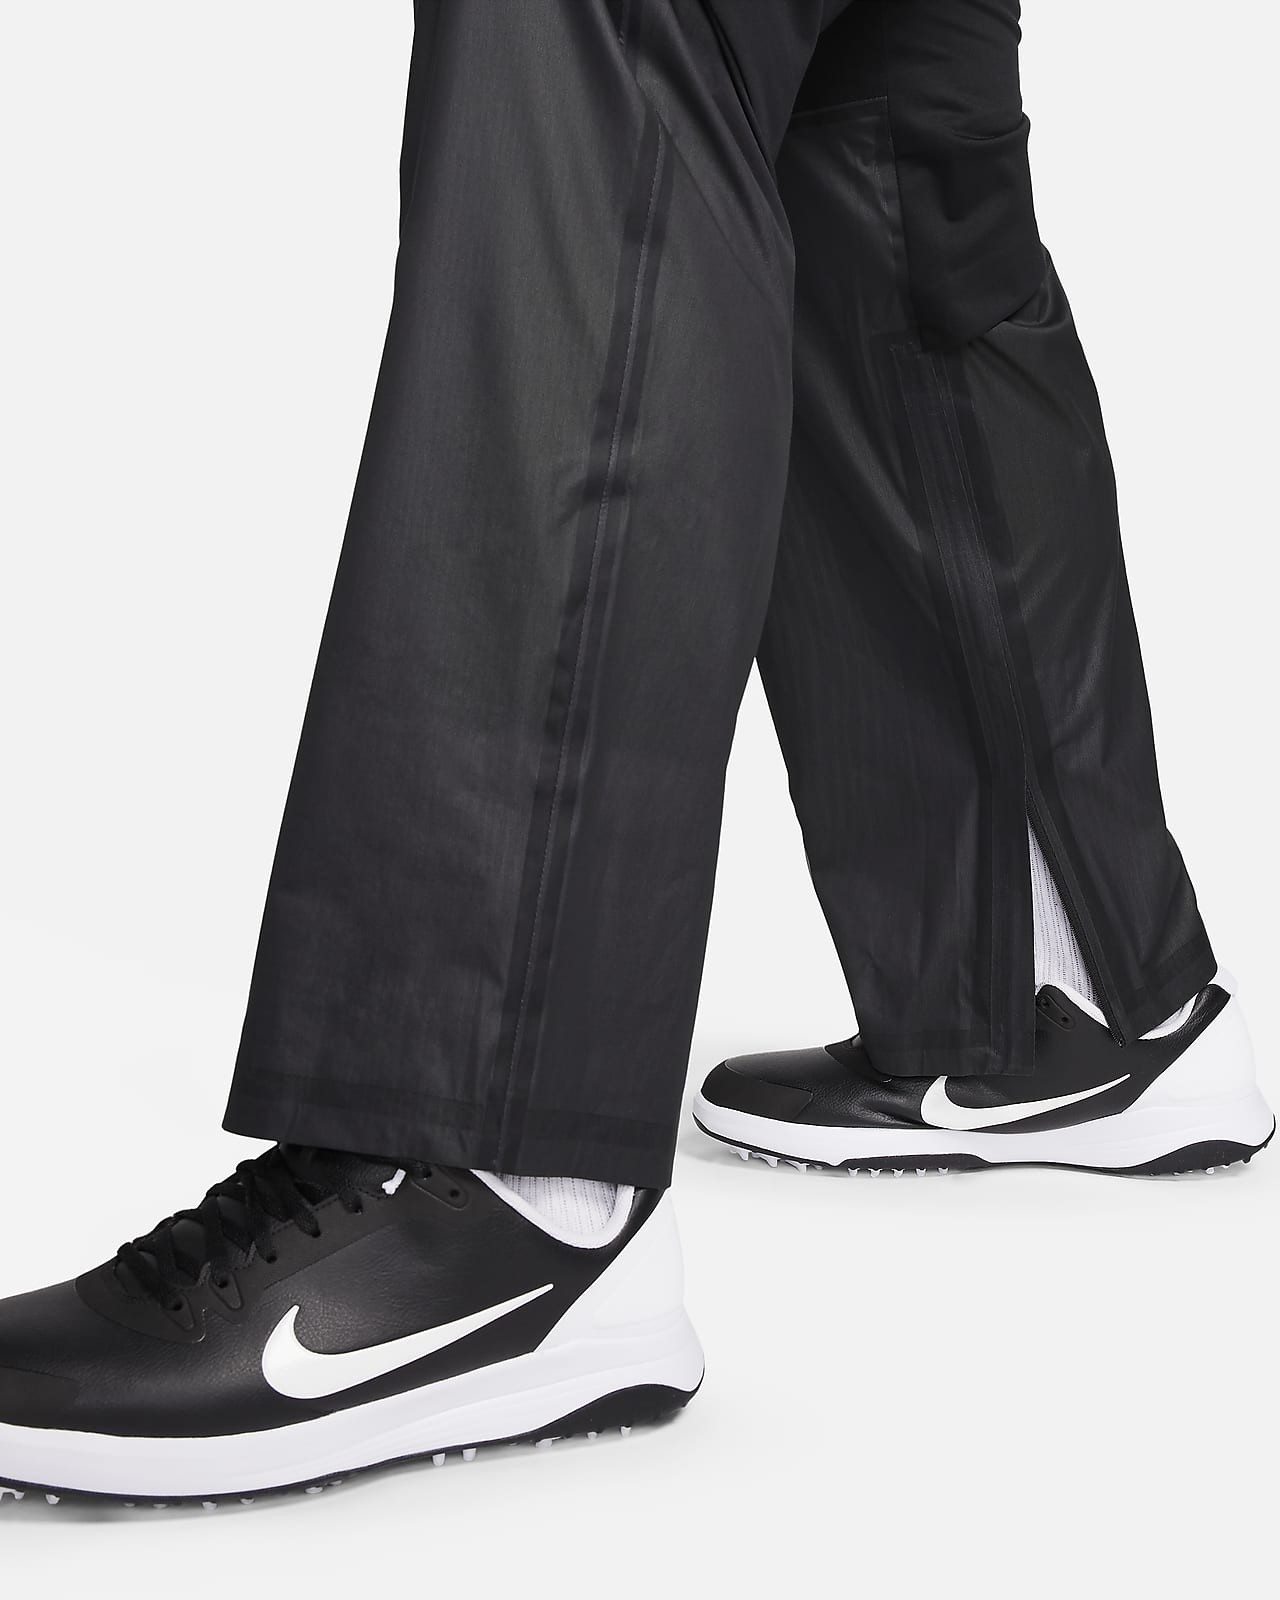 Nike Storm-FIT ADV Men's Golf Pants.